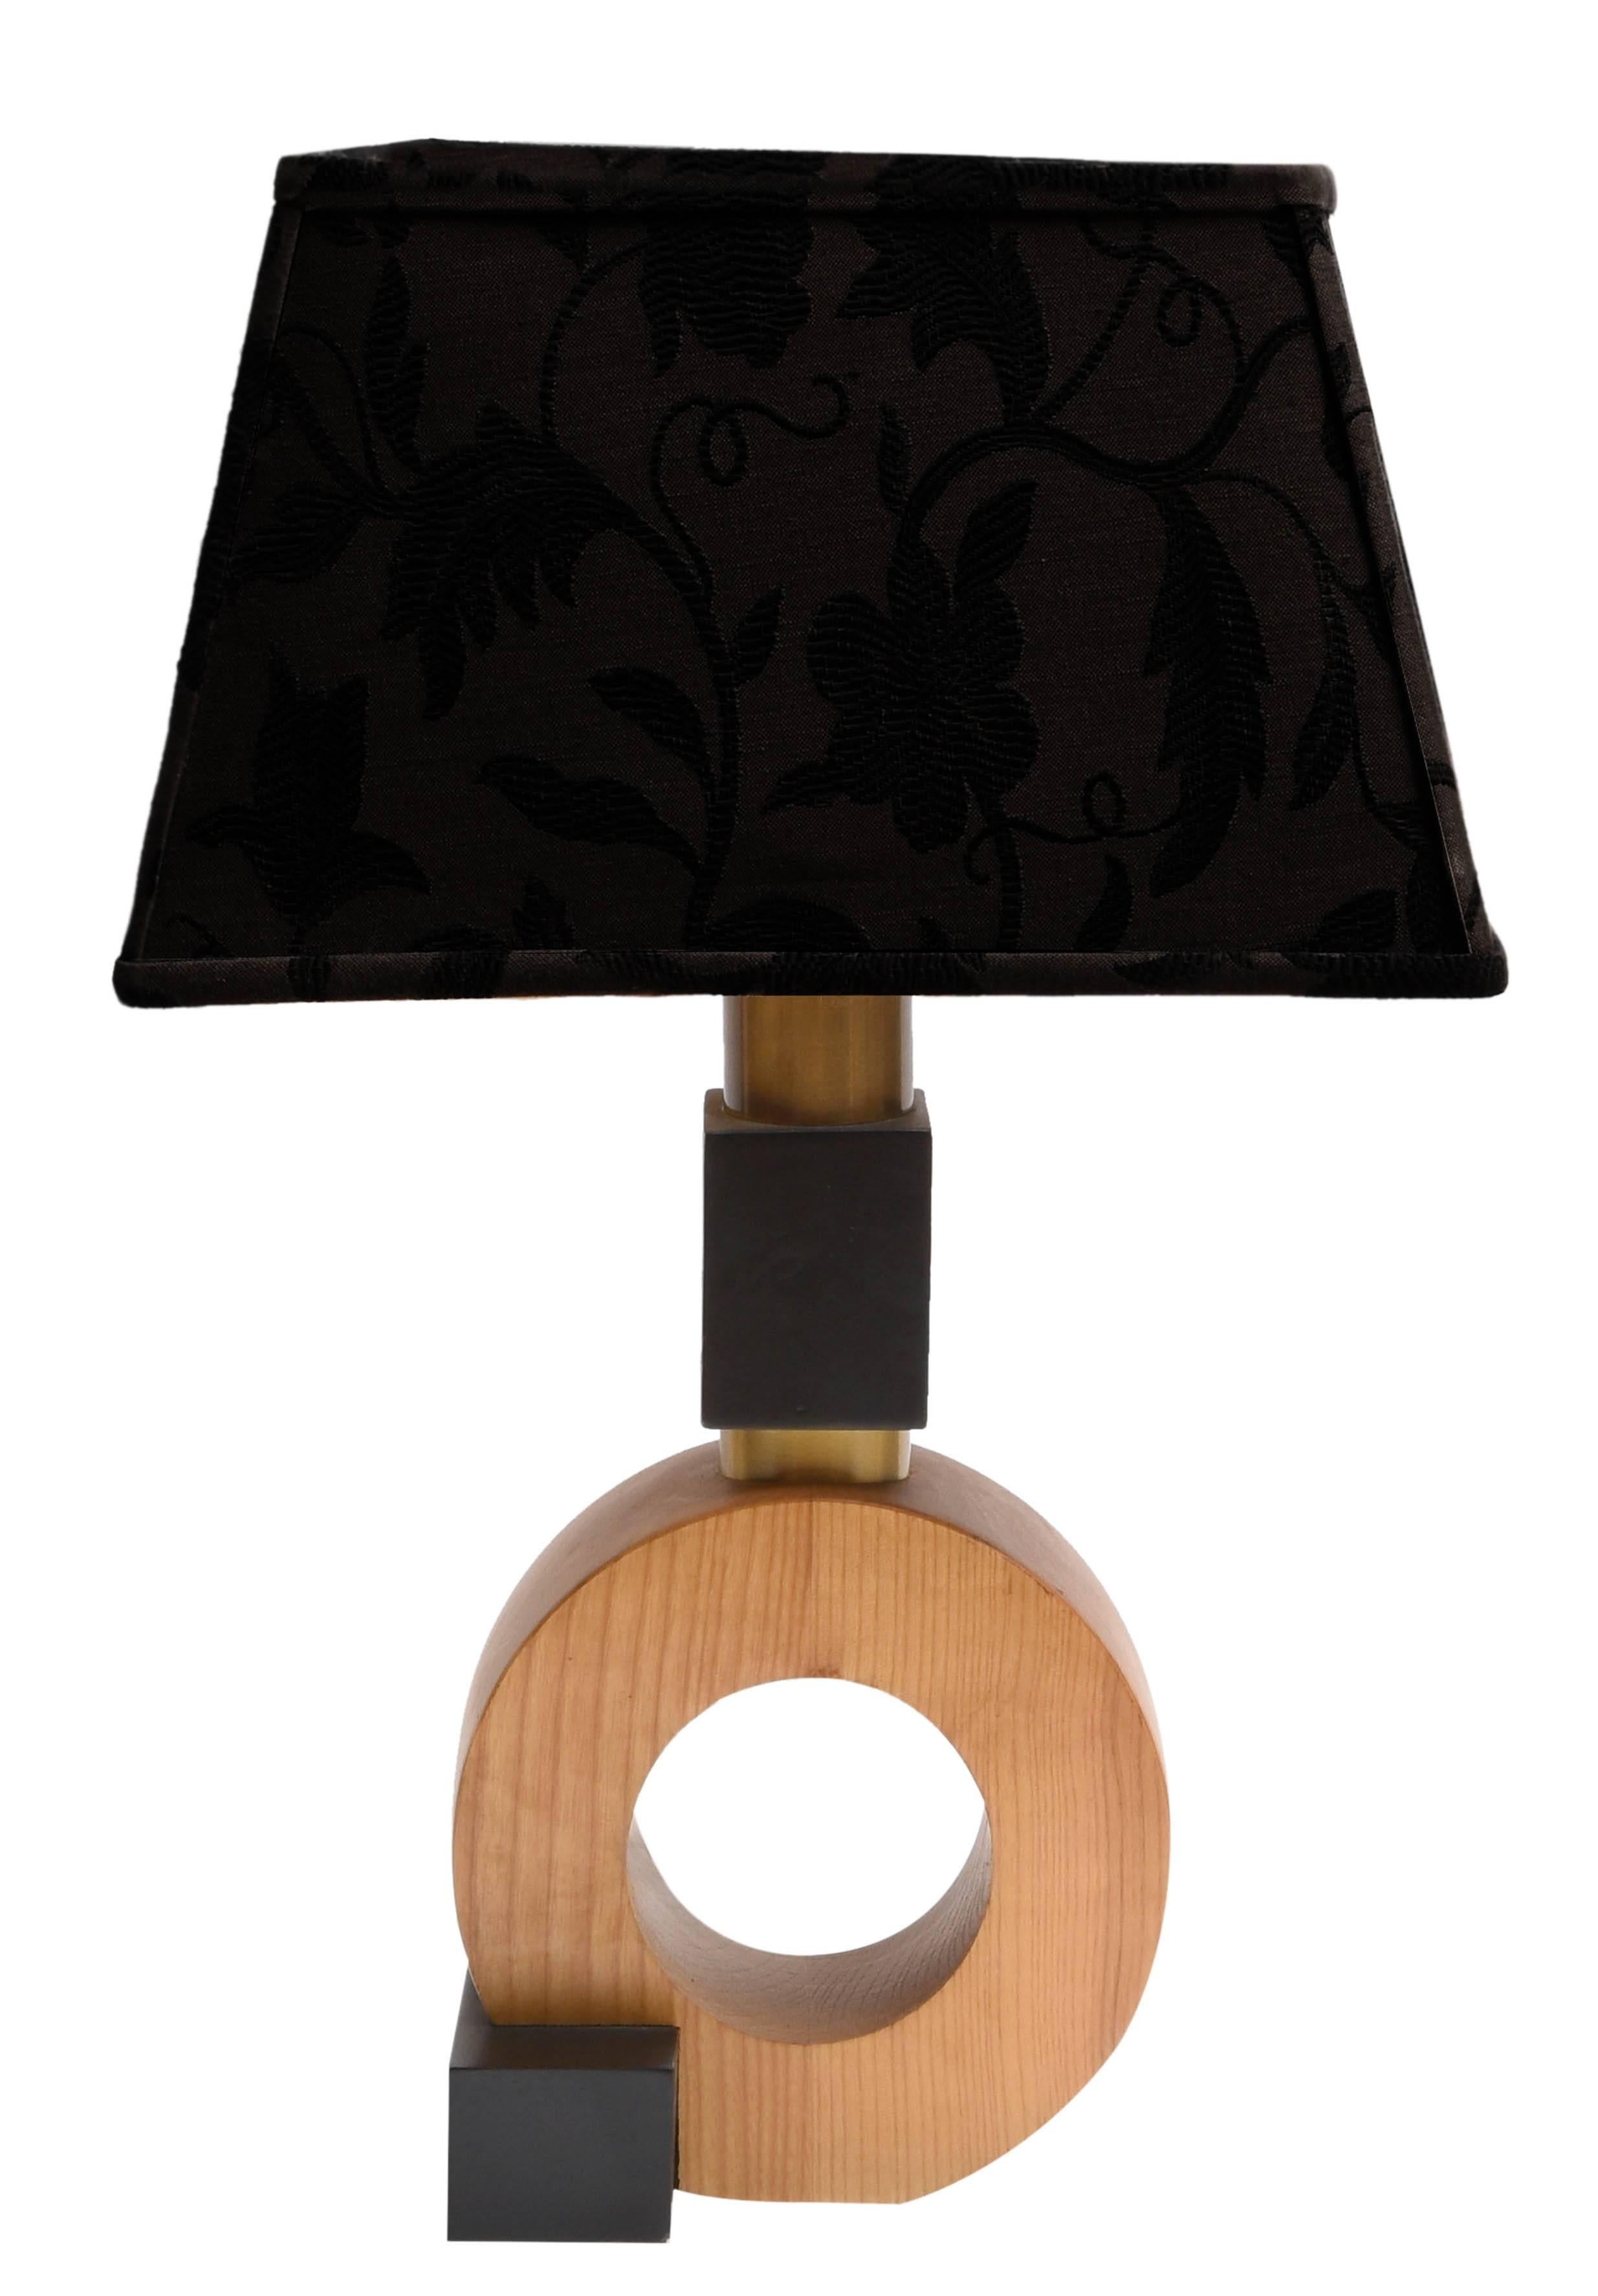 Geometric table lamp.